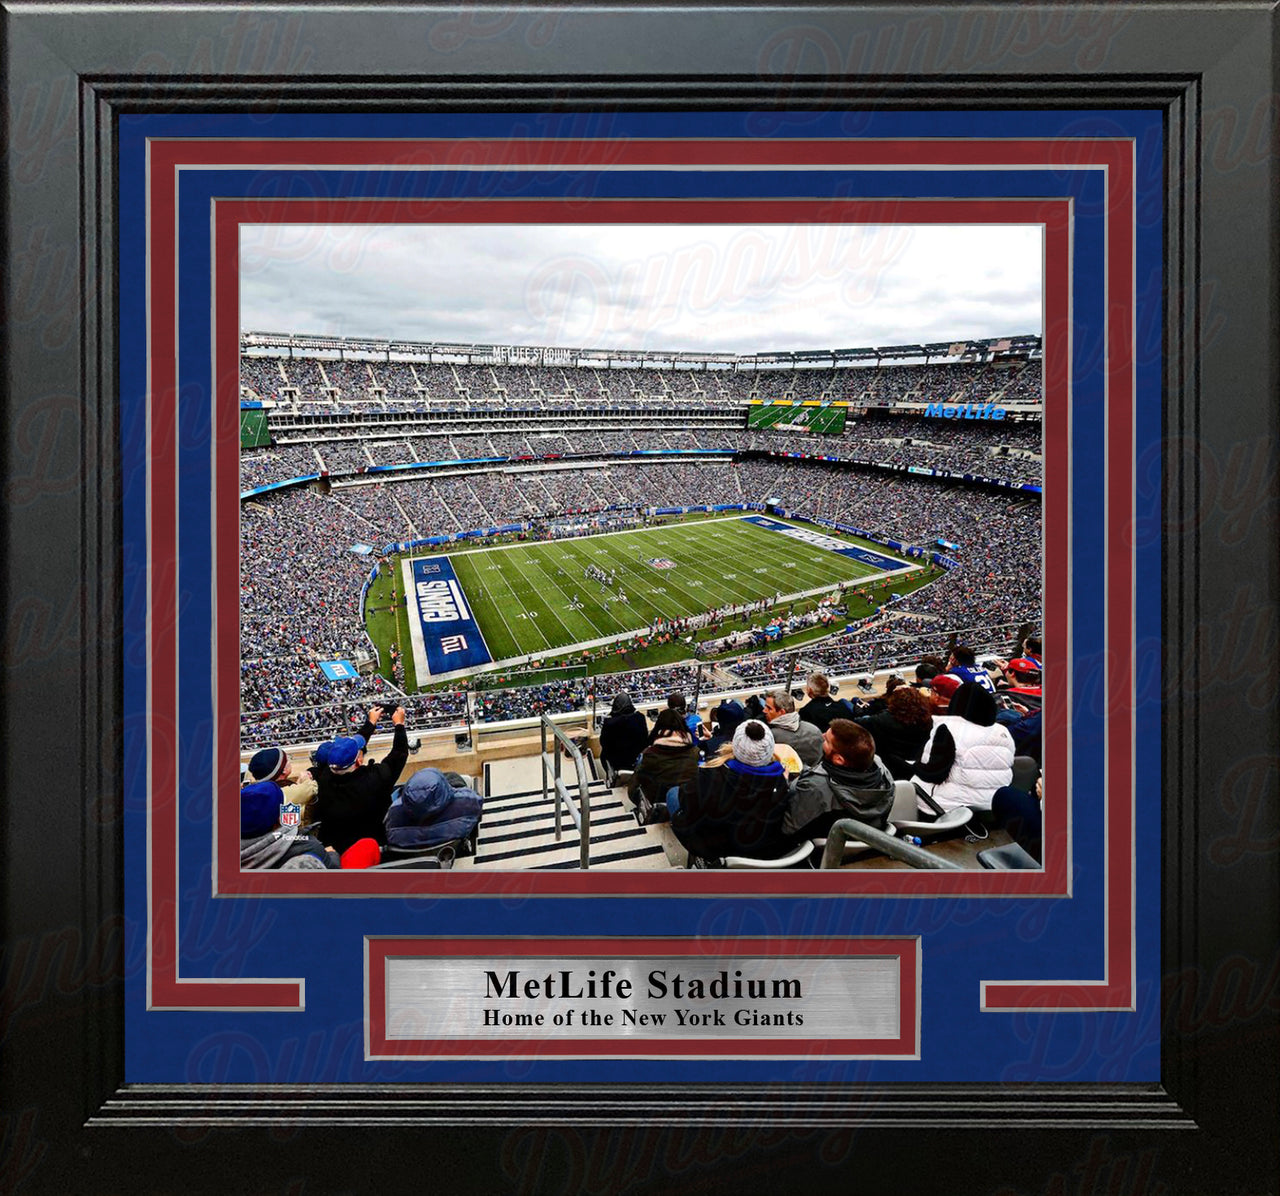 New York Giants MetLife Stadium Aerial View 8" x 10" Framed Football Photo - Dynasty Sports & Framing 